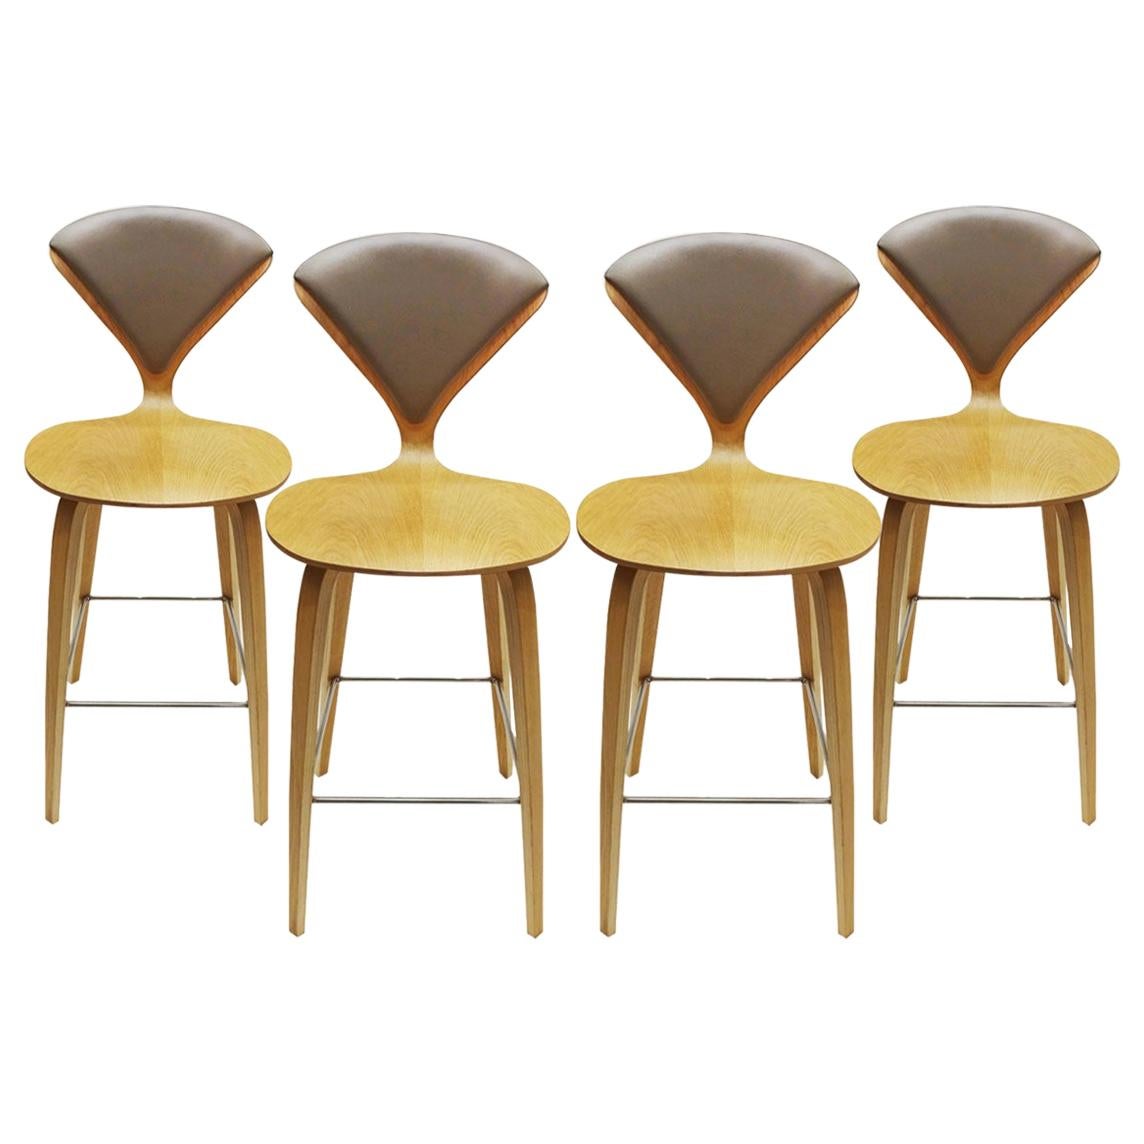 Set of 4 Norman Cherner Designed Oak, Chrome and Plywood Bar Stools